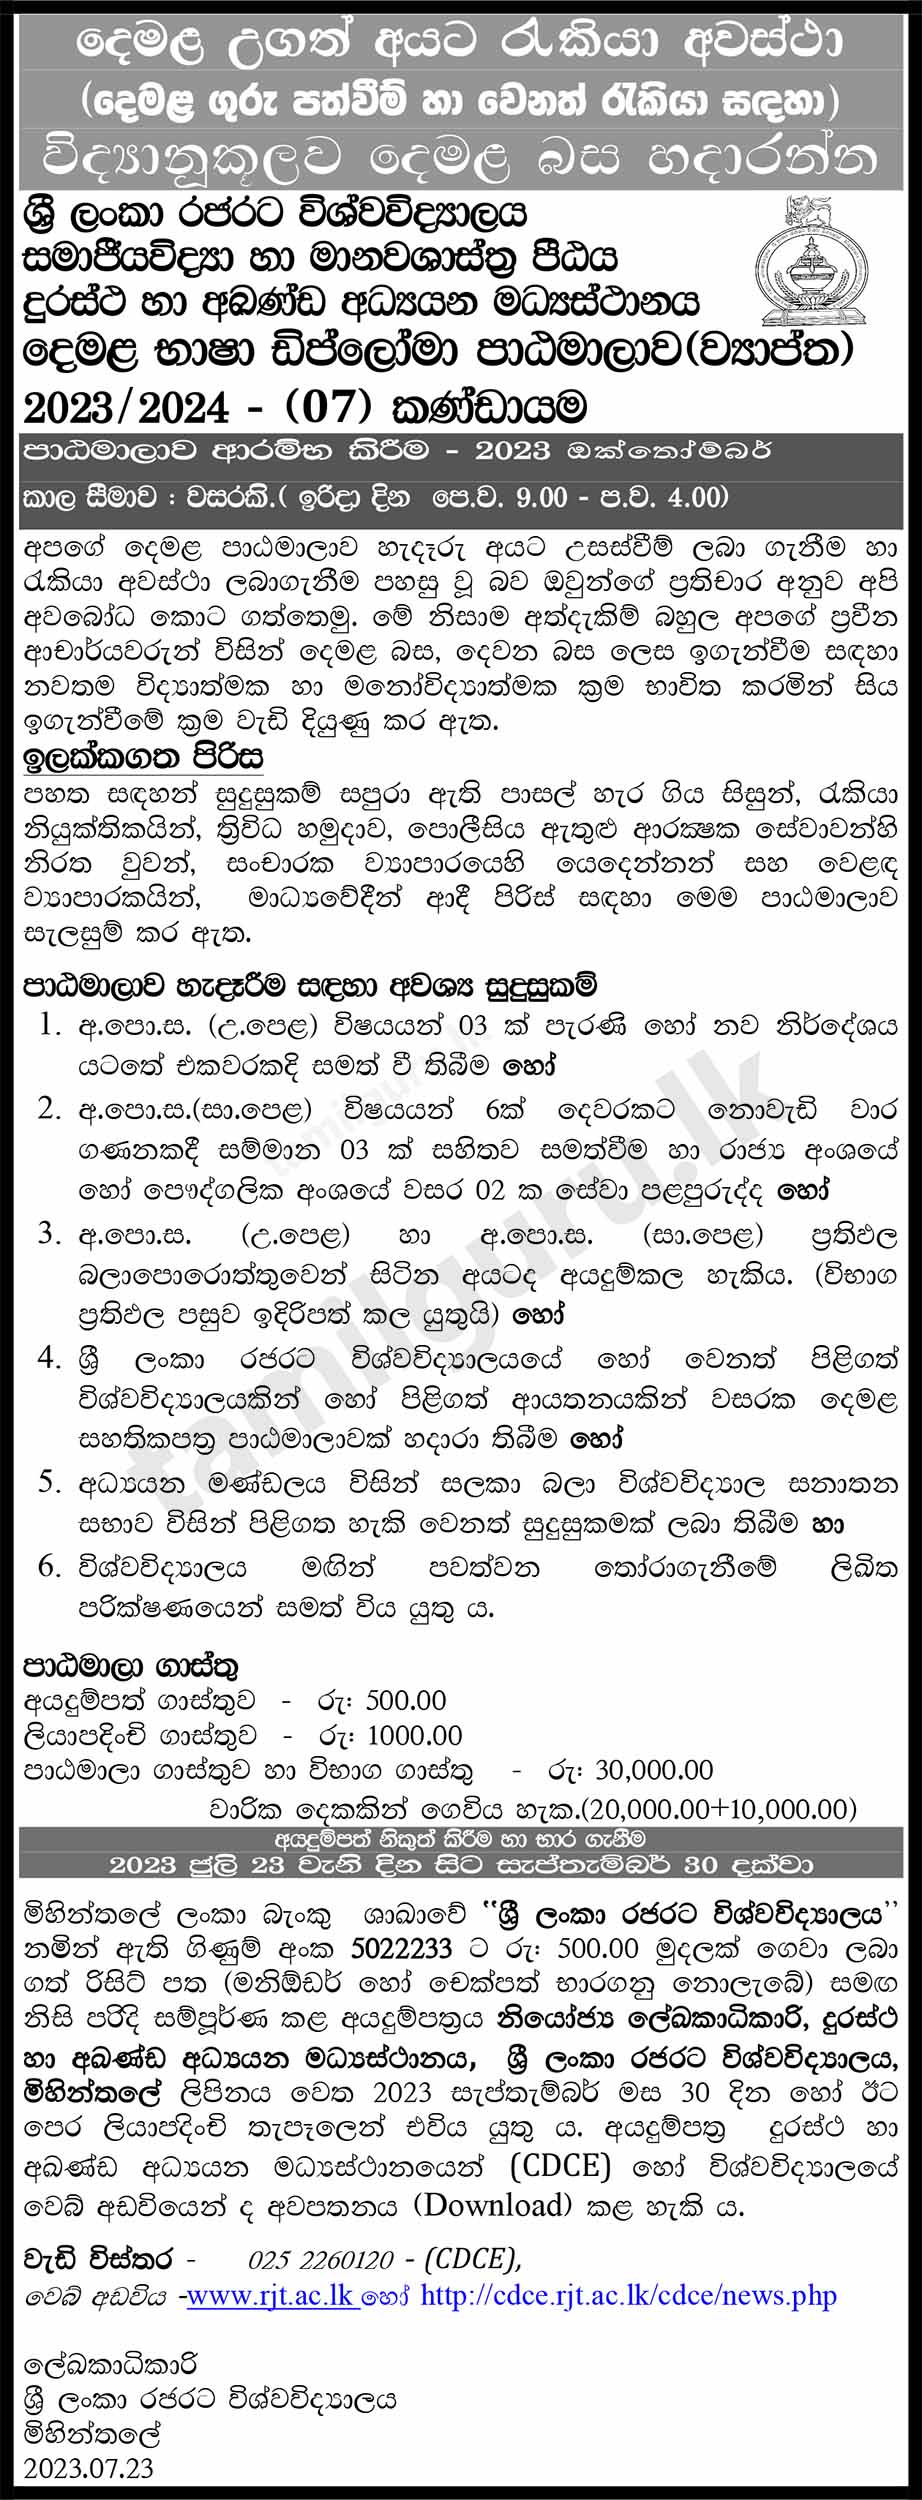 Diploma in Tamil Language 2023 - Rajarata University of Sri Lanka (RUSL)